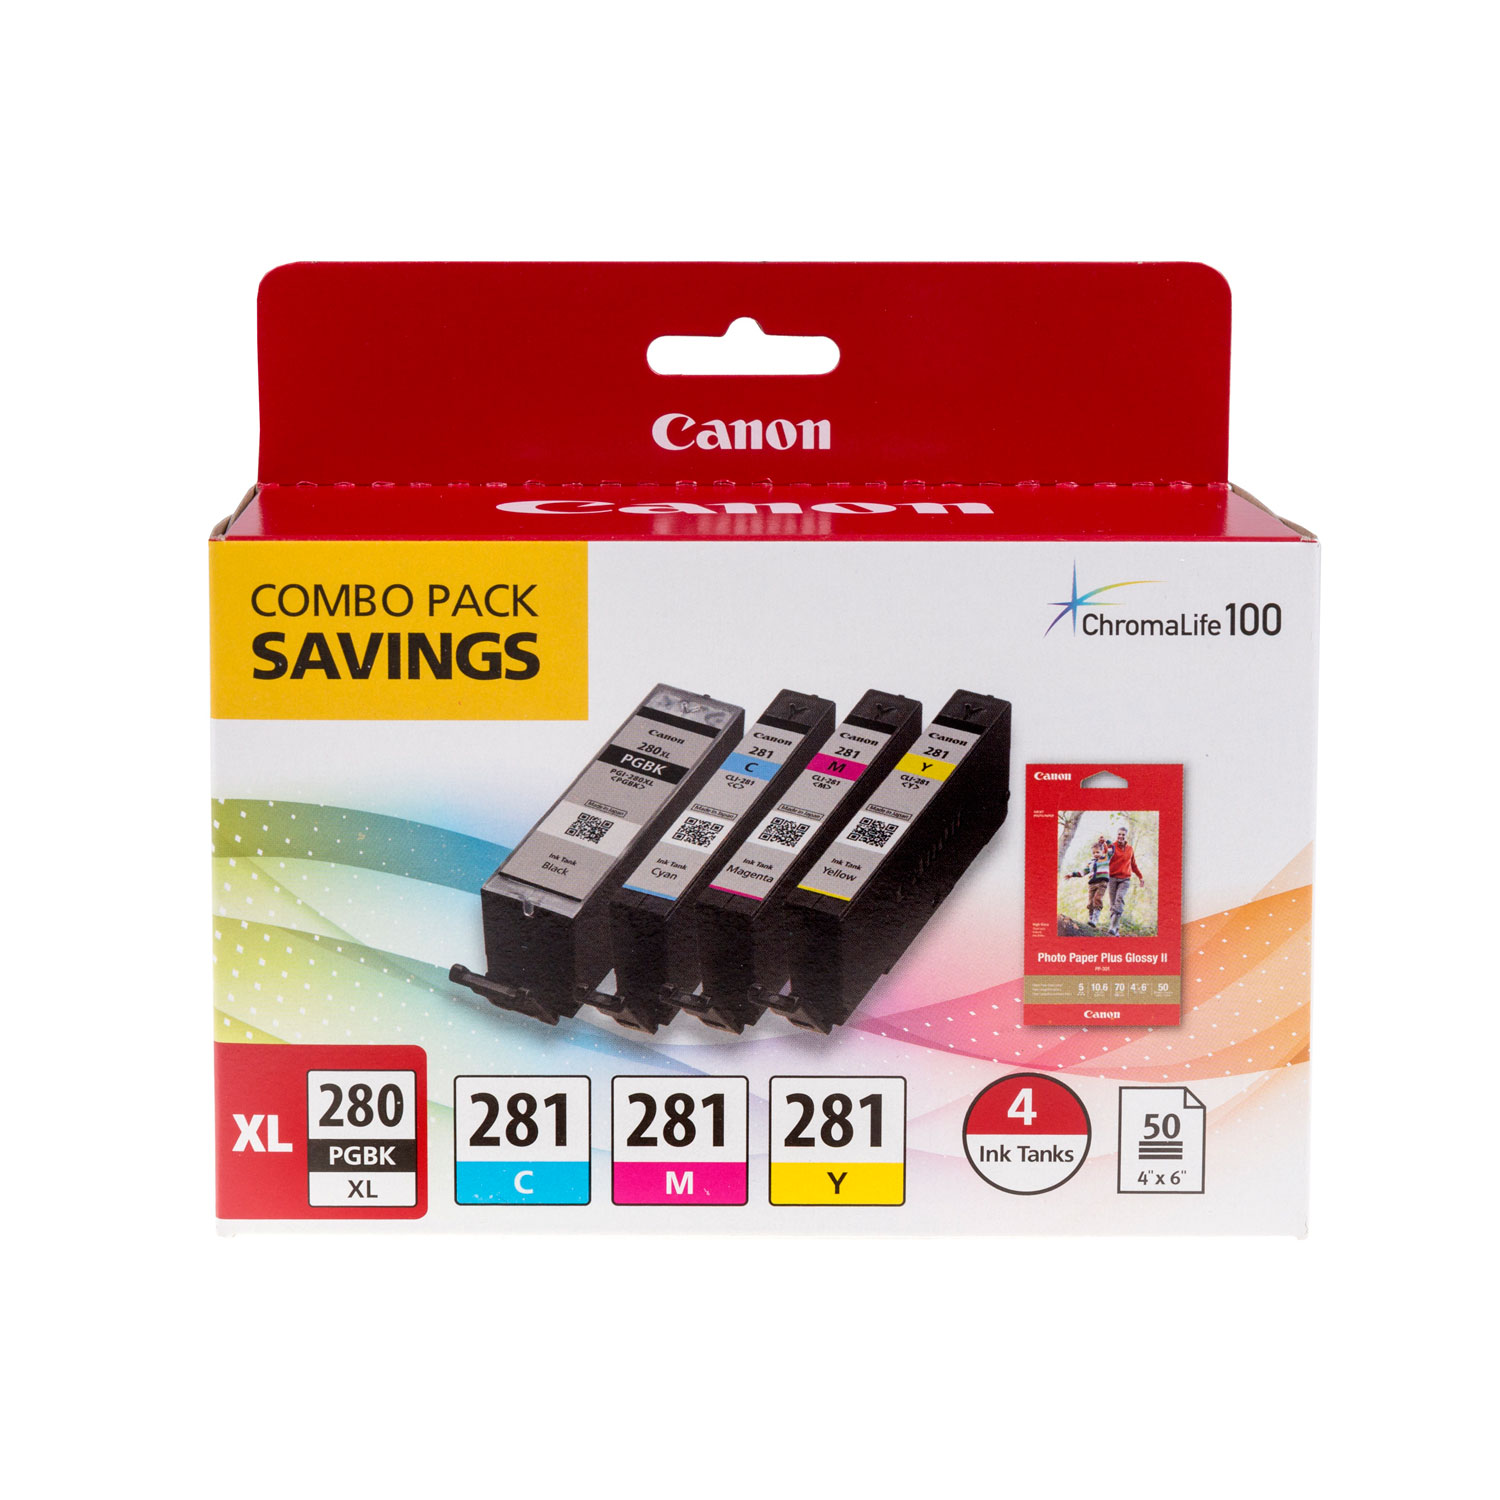 Canon Ink Cartridge/Paper Kit -Combo Pack - Black, Cyan, Magenta, Yellow